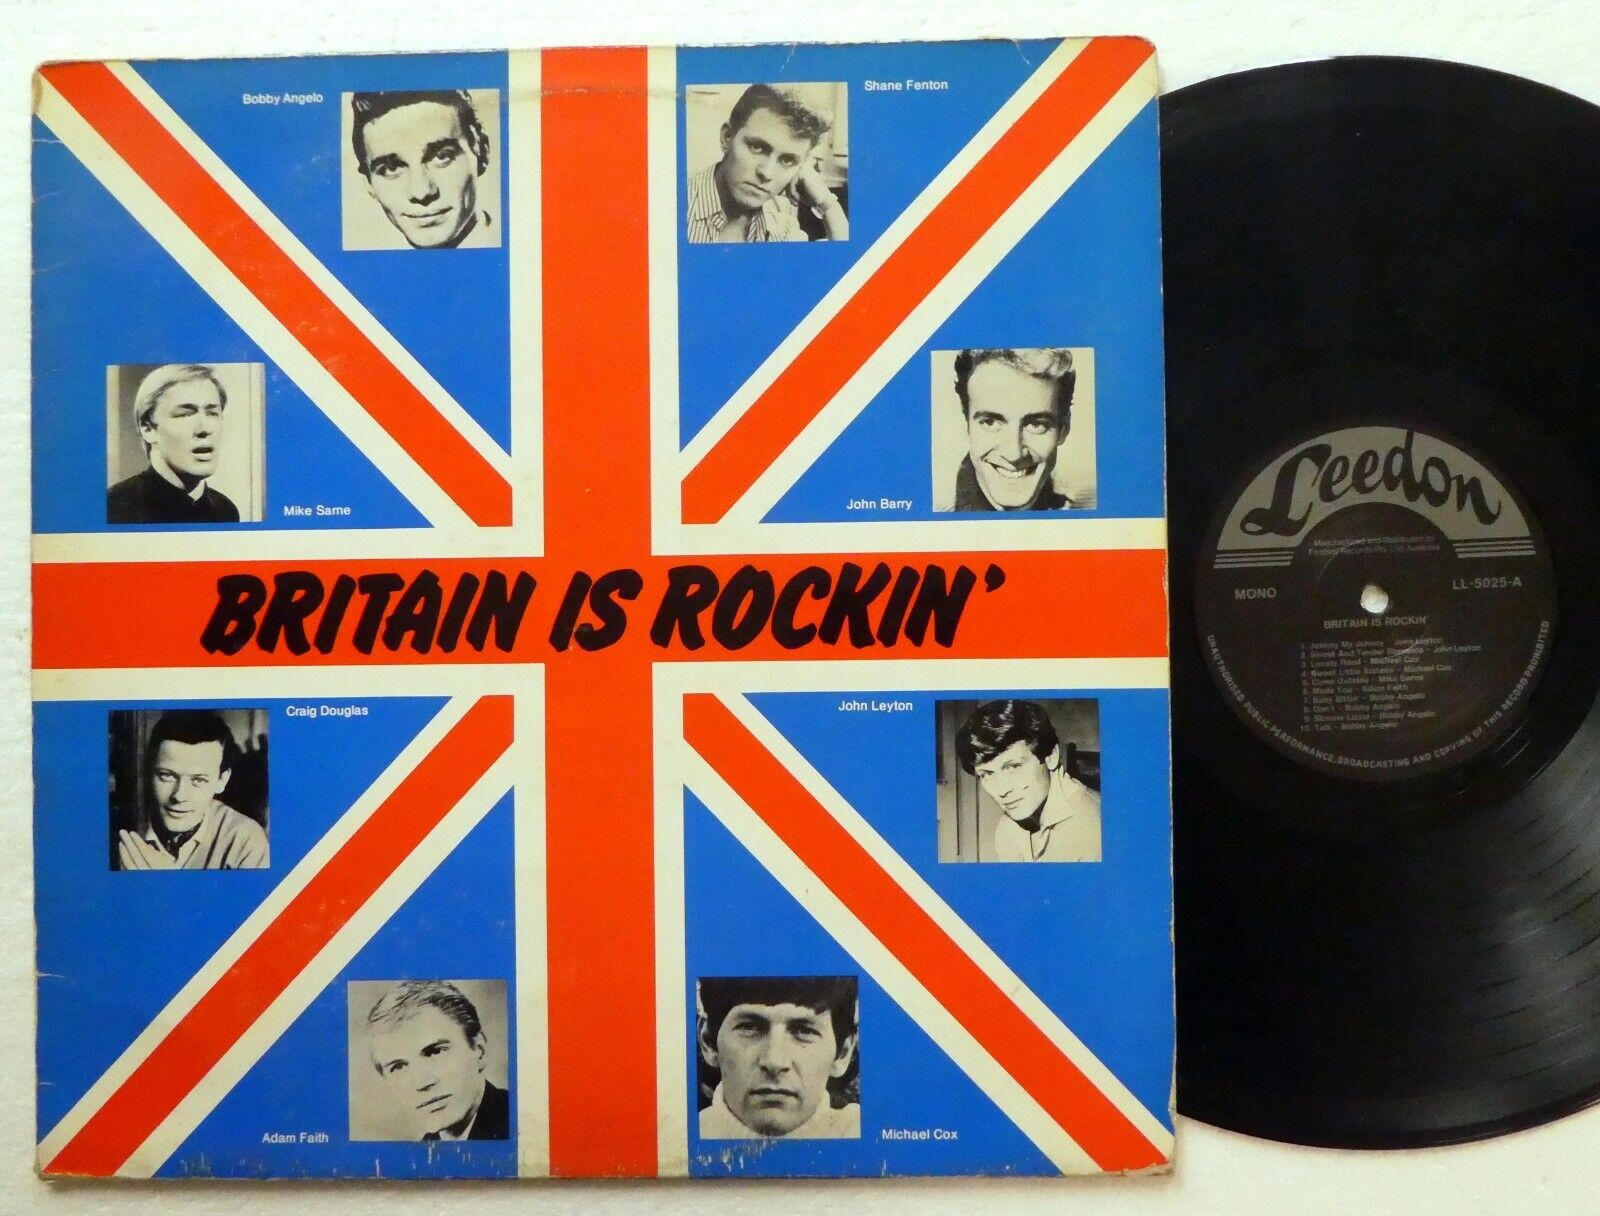 BRITAIN IS ROCKIN LP Bobby Angelo, Adam Faith, John Barry, Michael Cox  #3513